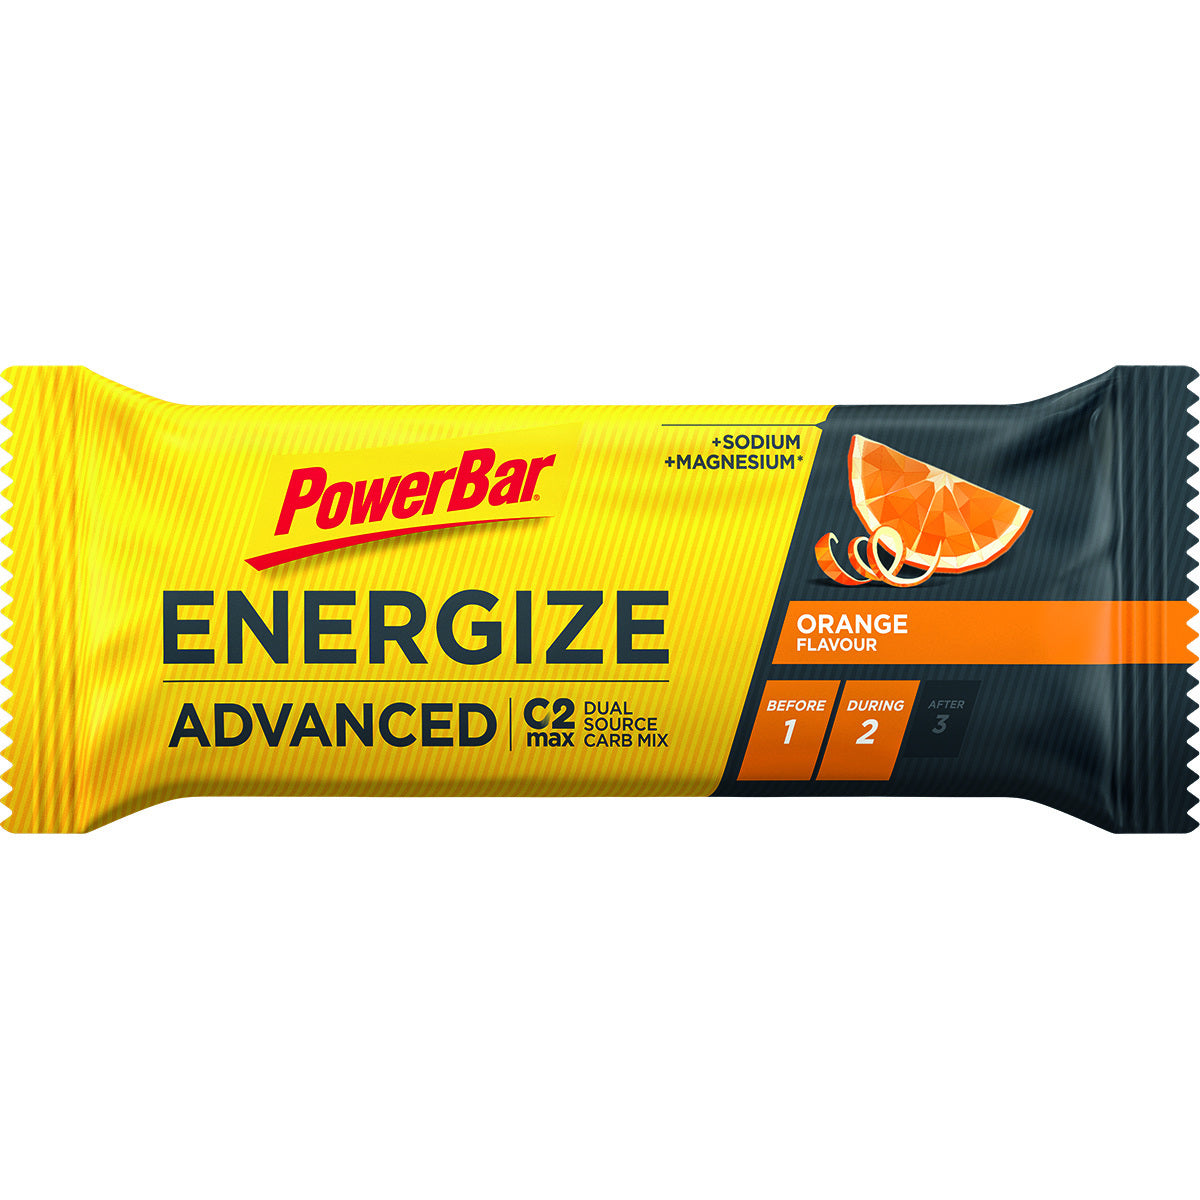 PowerBar Energize Advanced Bar orange